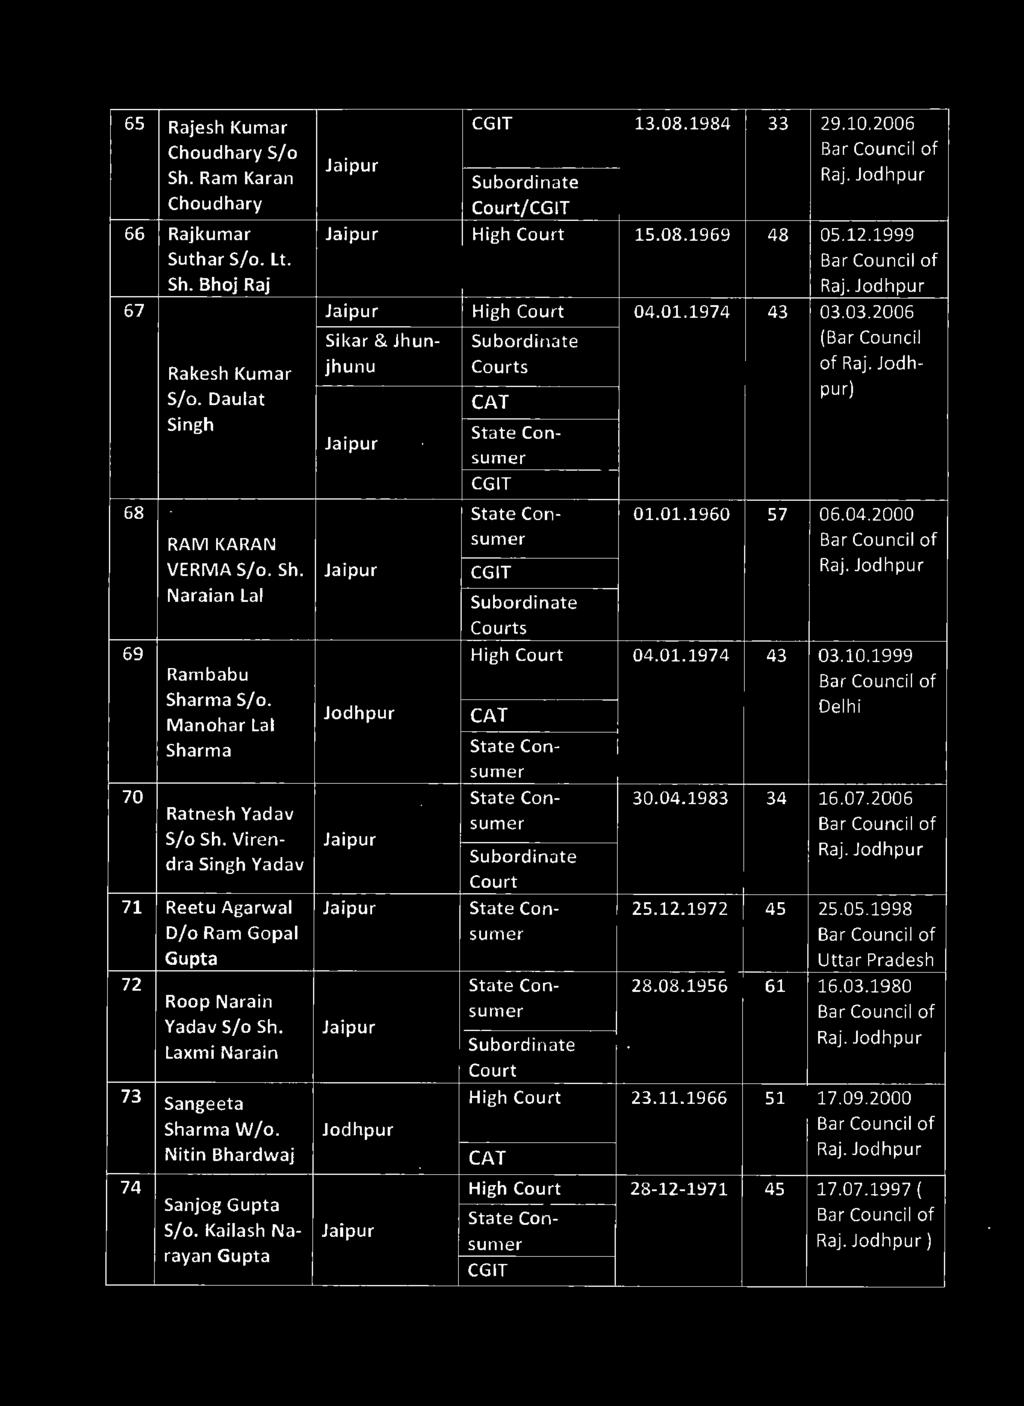 Virendra Singh Yadav Subordinat e 71 Reetu Agarwal Stat e Con- 25.12.1972 45 25.05.